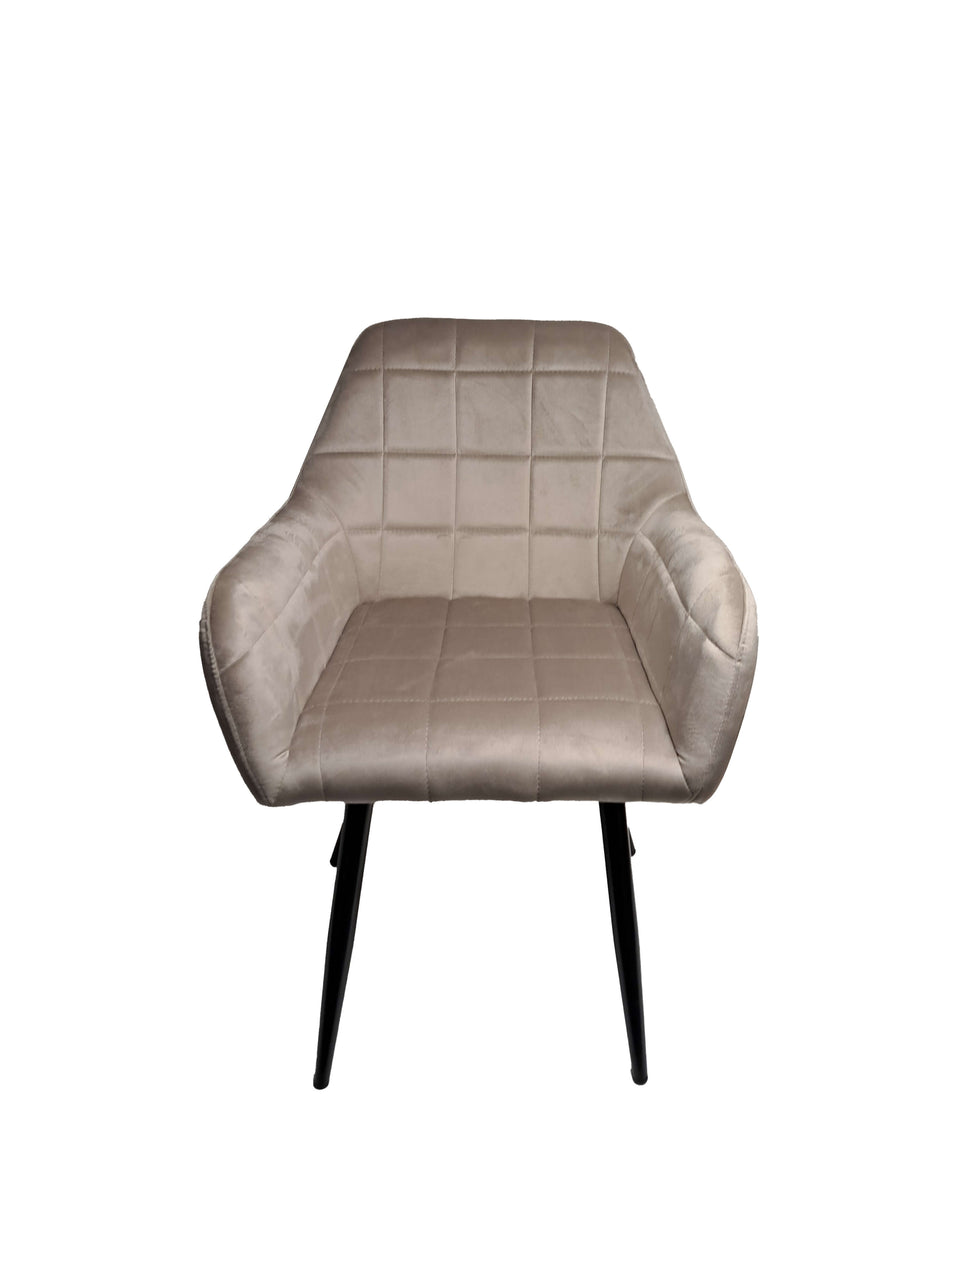 Wilhelm - dining room chair, living room chair, office chair, metal legs (Set of 2)